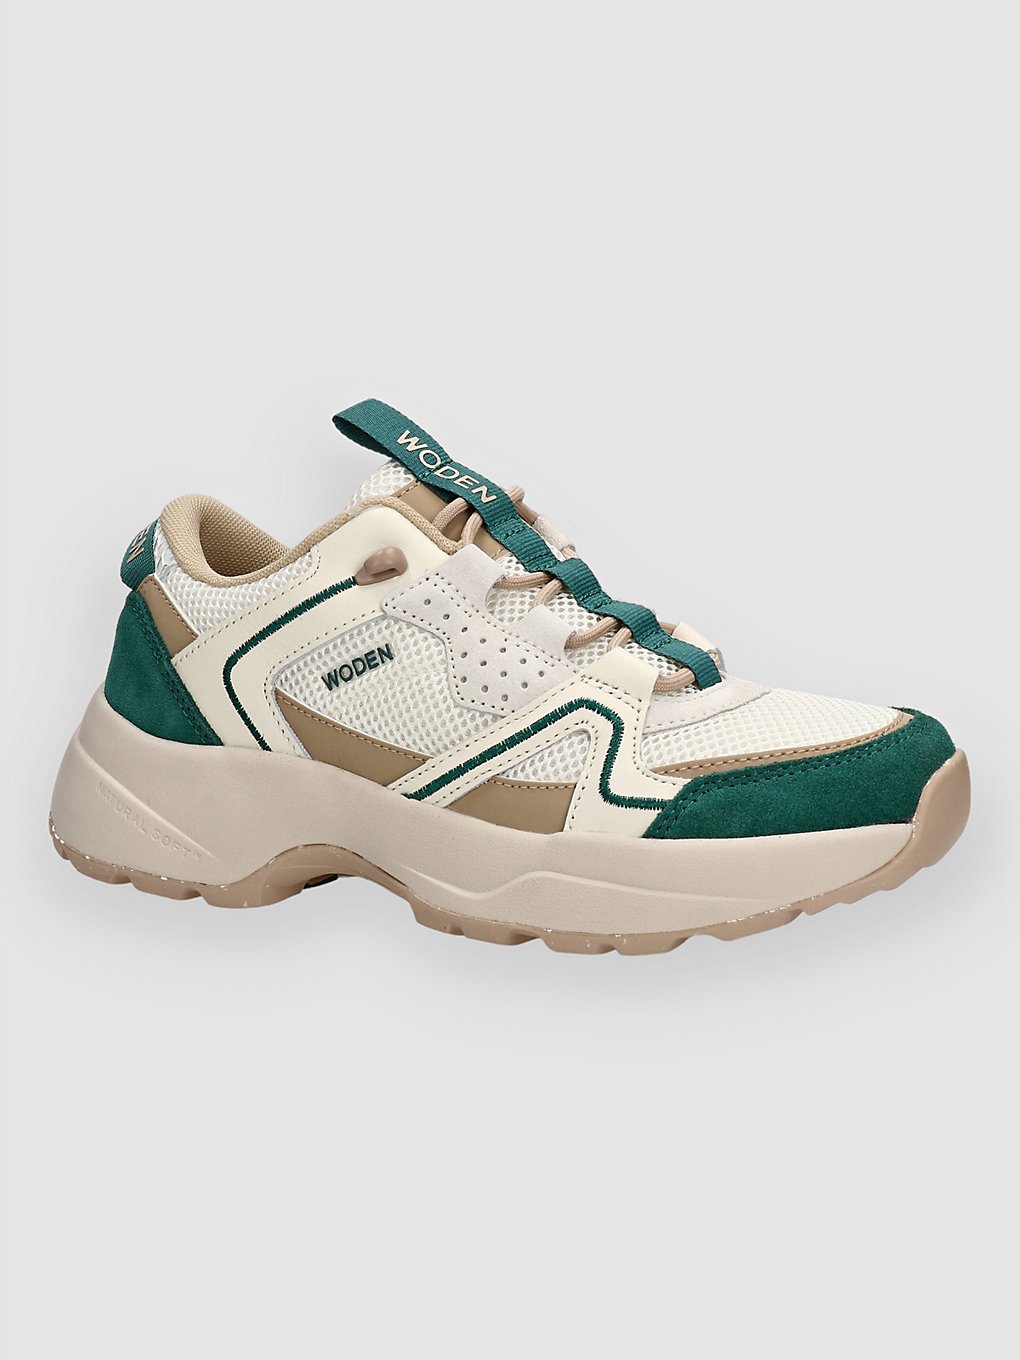 woden sif reflective sneakers botanical whisper white/botanical